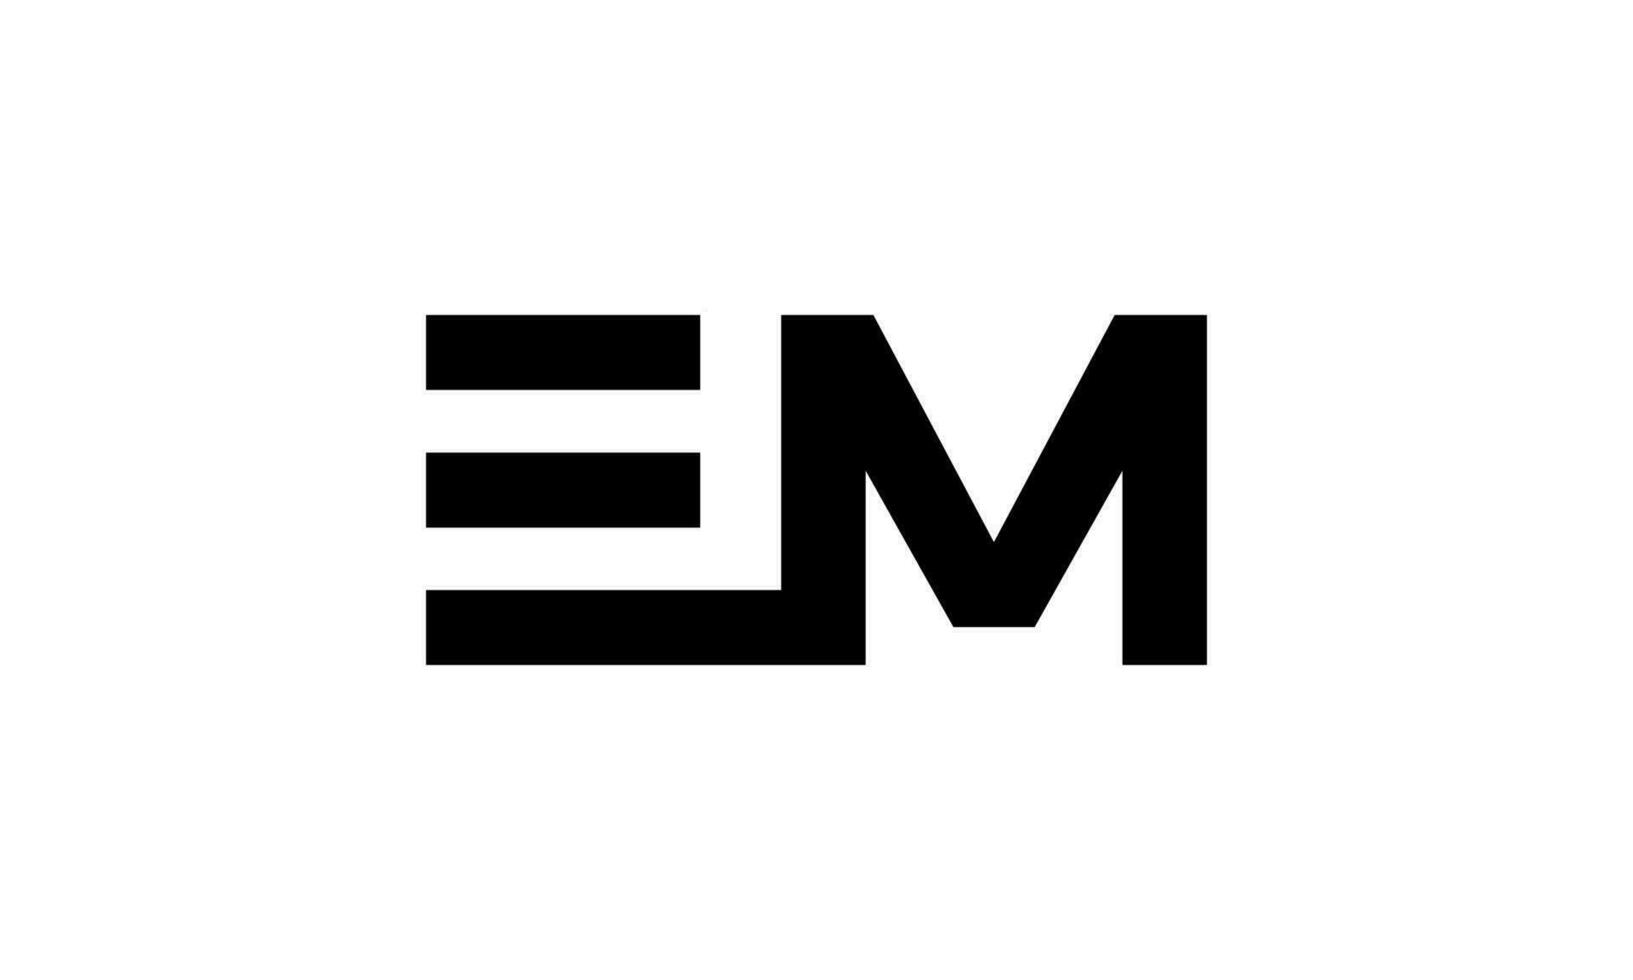 Letter EM logo design. Initial letter EM logo in whit background. free vector